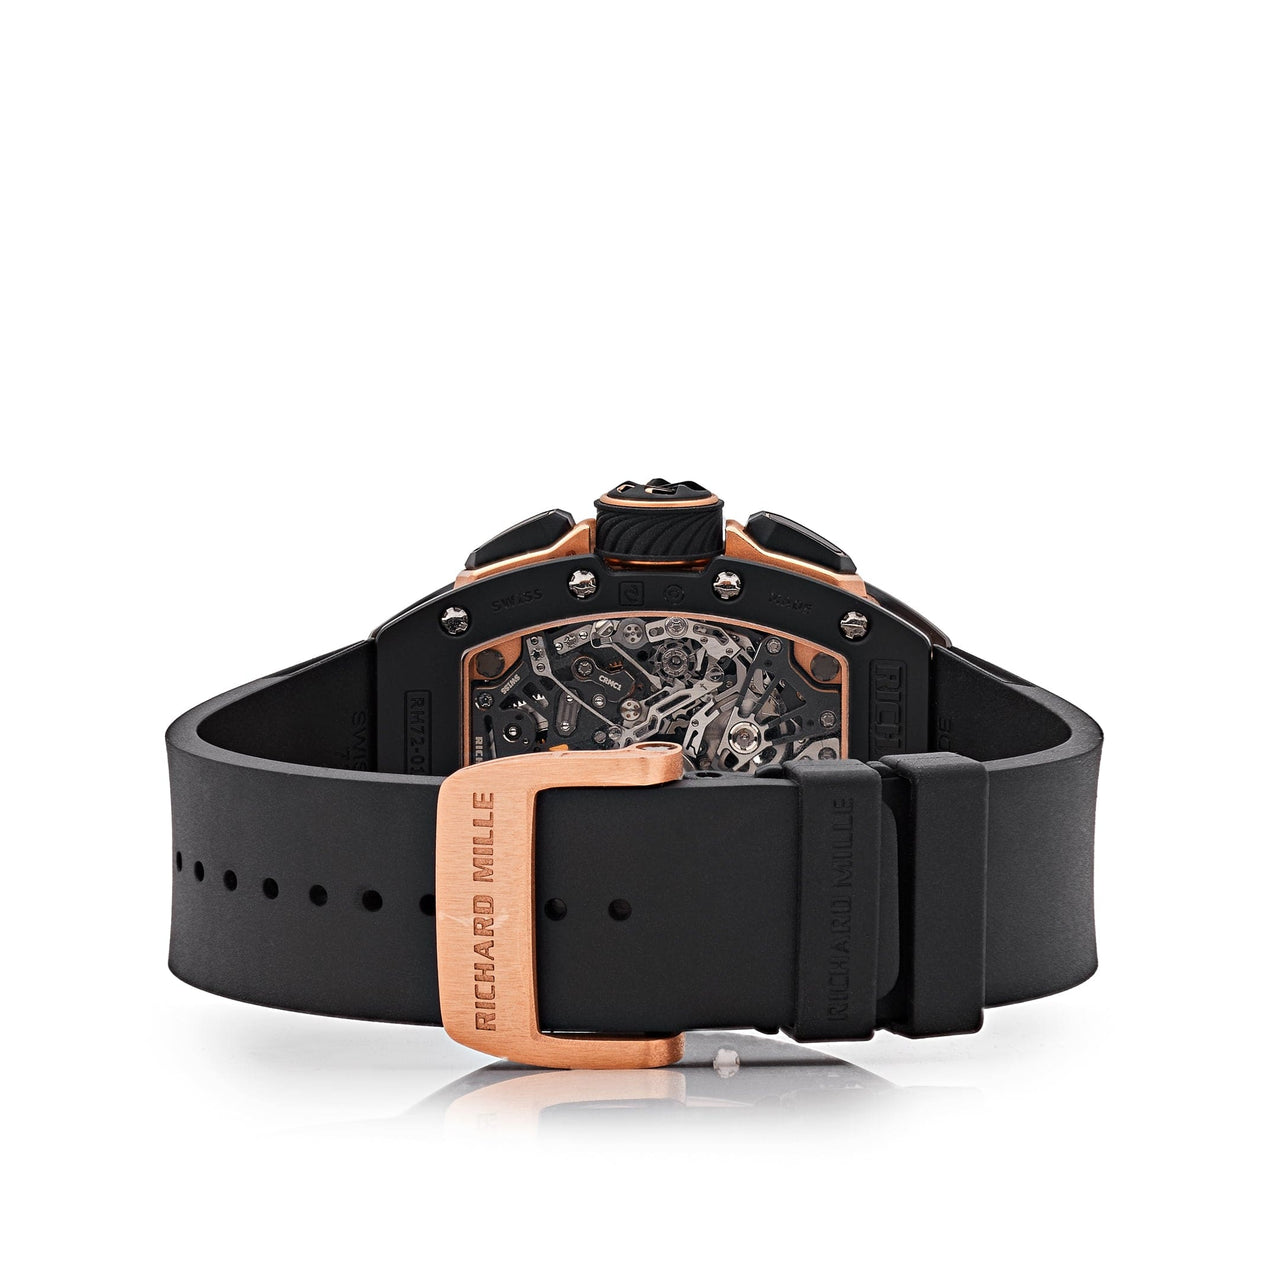 Luxury Watch Richard Mille Lifestyle IN-HOUSE Chronograph Black Ceramic RM72-01 Wrist Aficionado